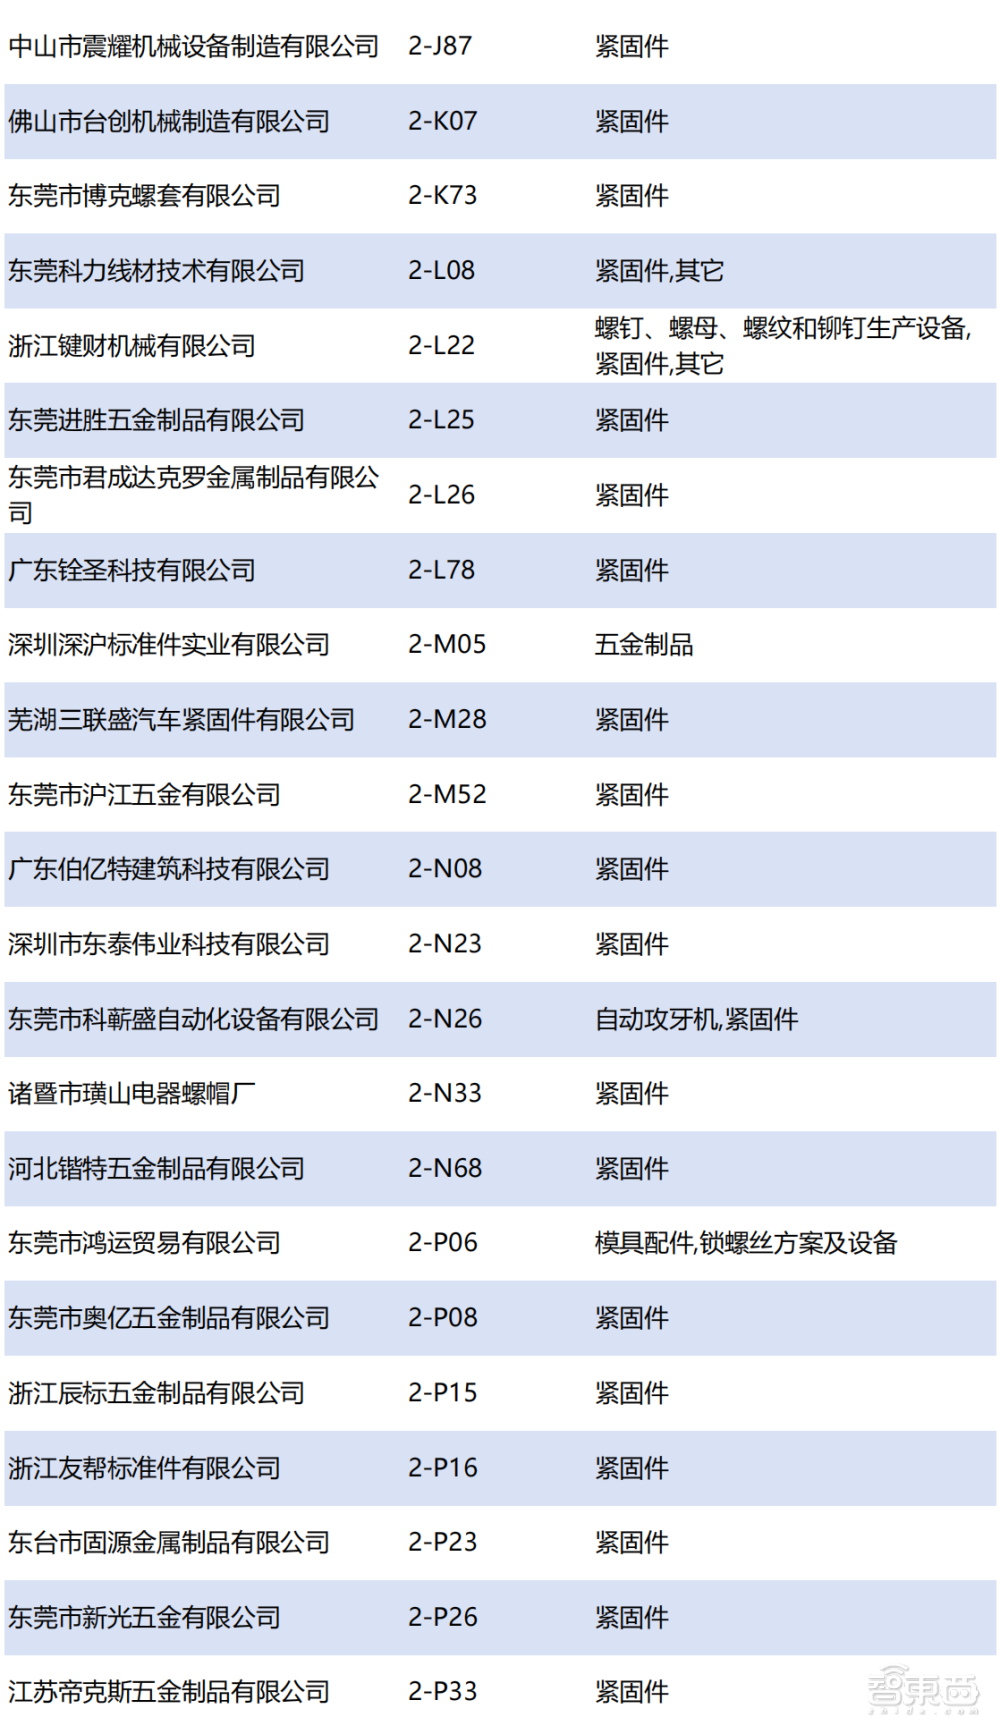 ITES深圳工业展展商名录公布！3月28日-31日深圳国际会展中心（宝安）举行